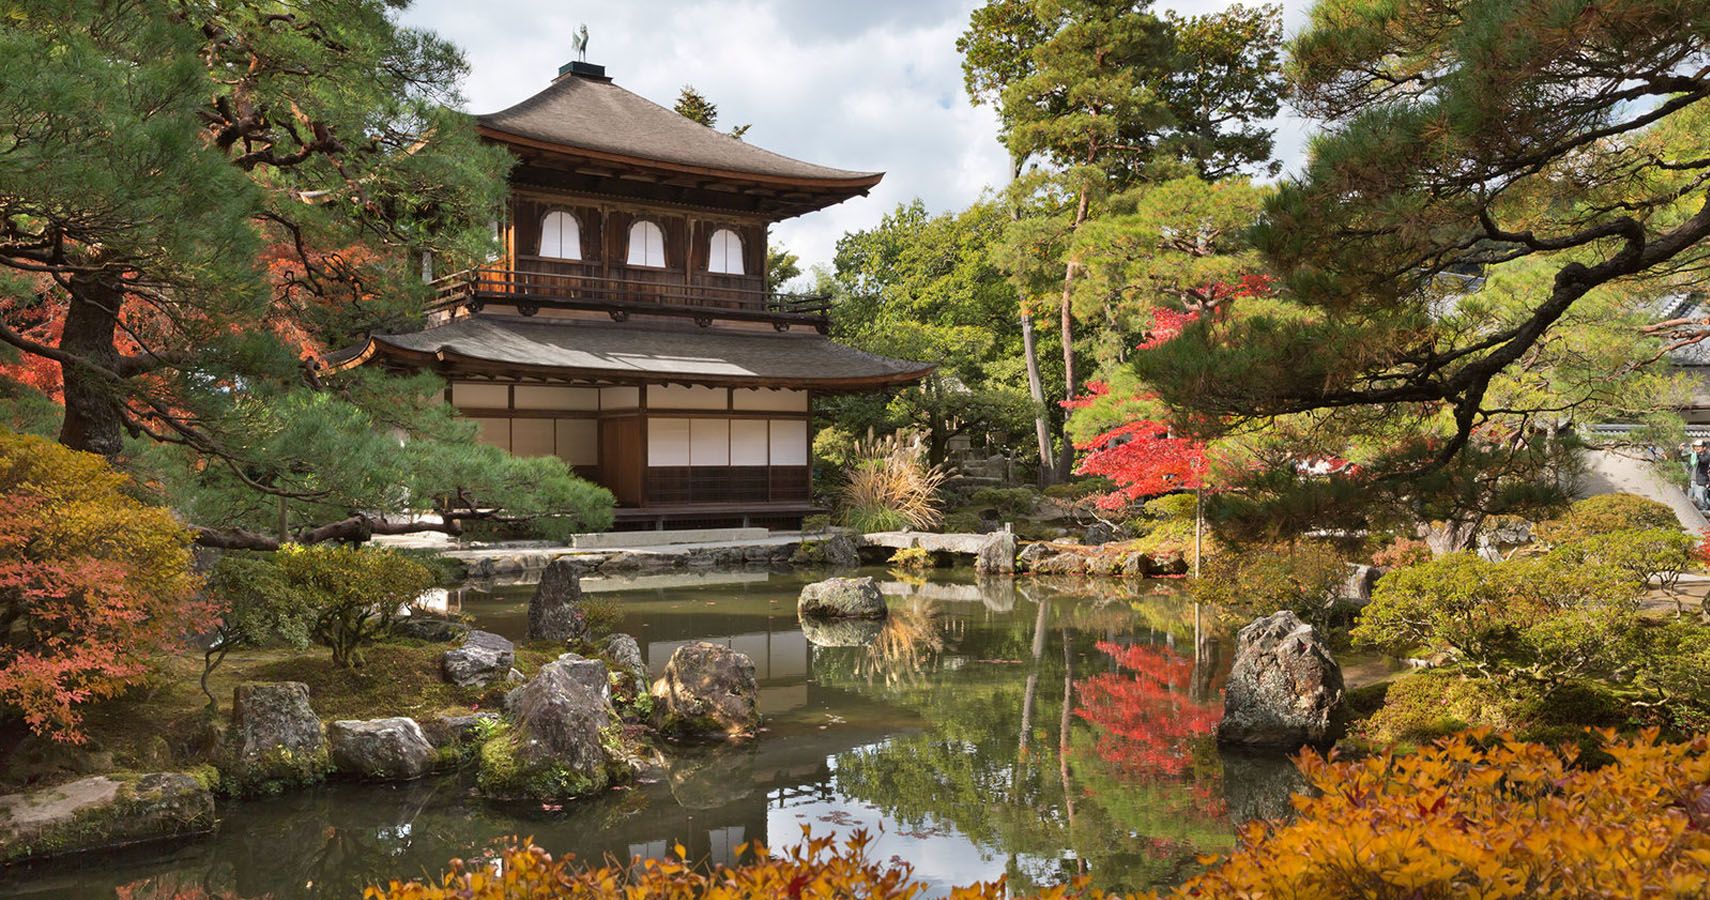 8 Traditional Japanese Homes That Belong In A Studio Ghibli Movie